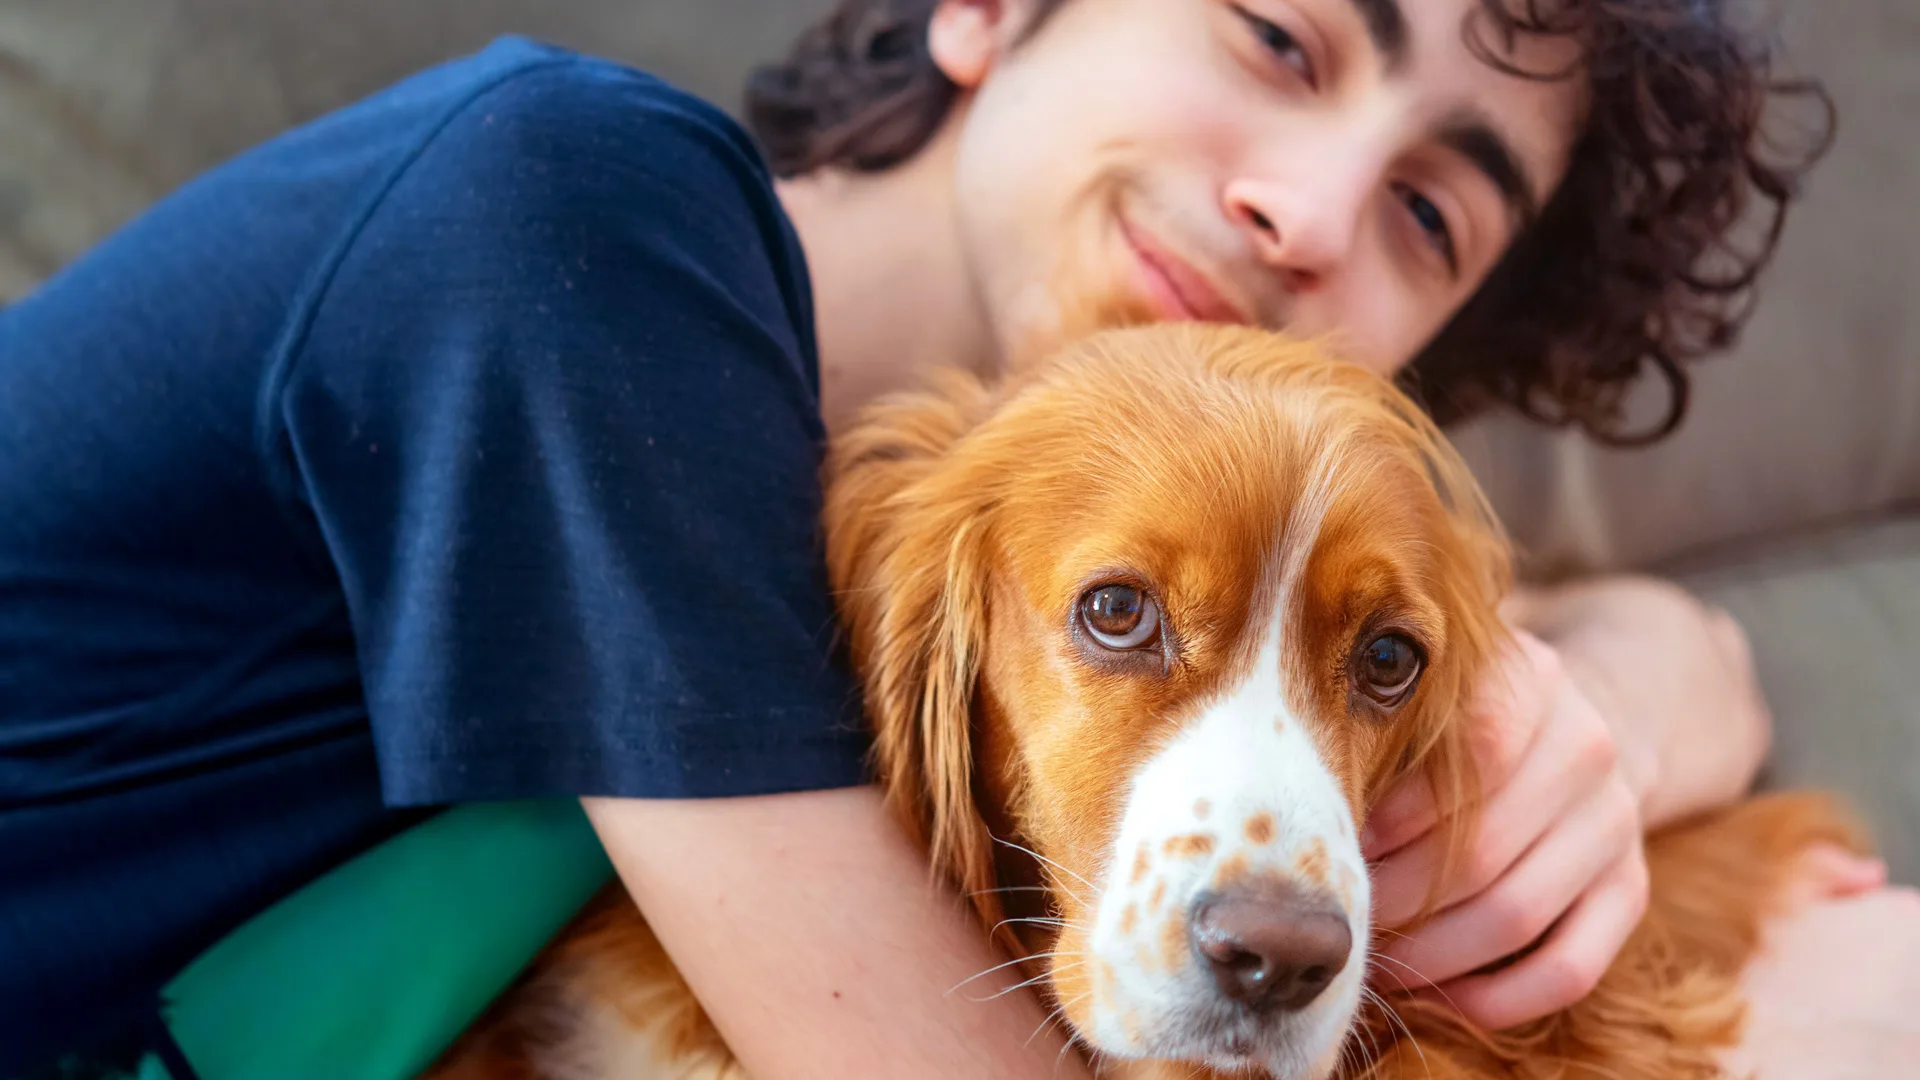 A photograph of a teenage boy cuddling an orange and white spaniel dog